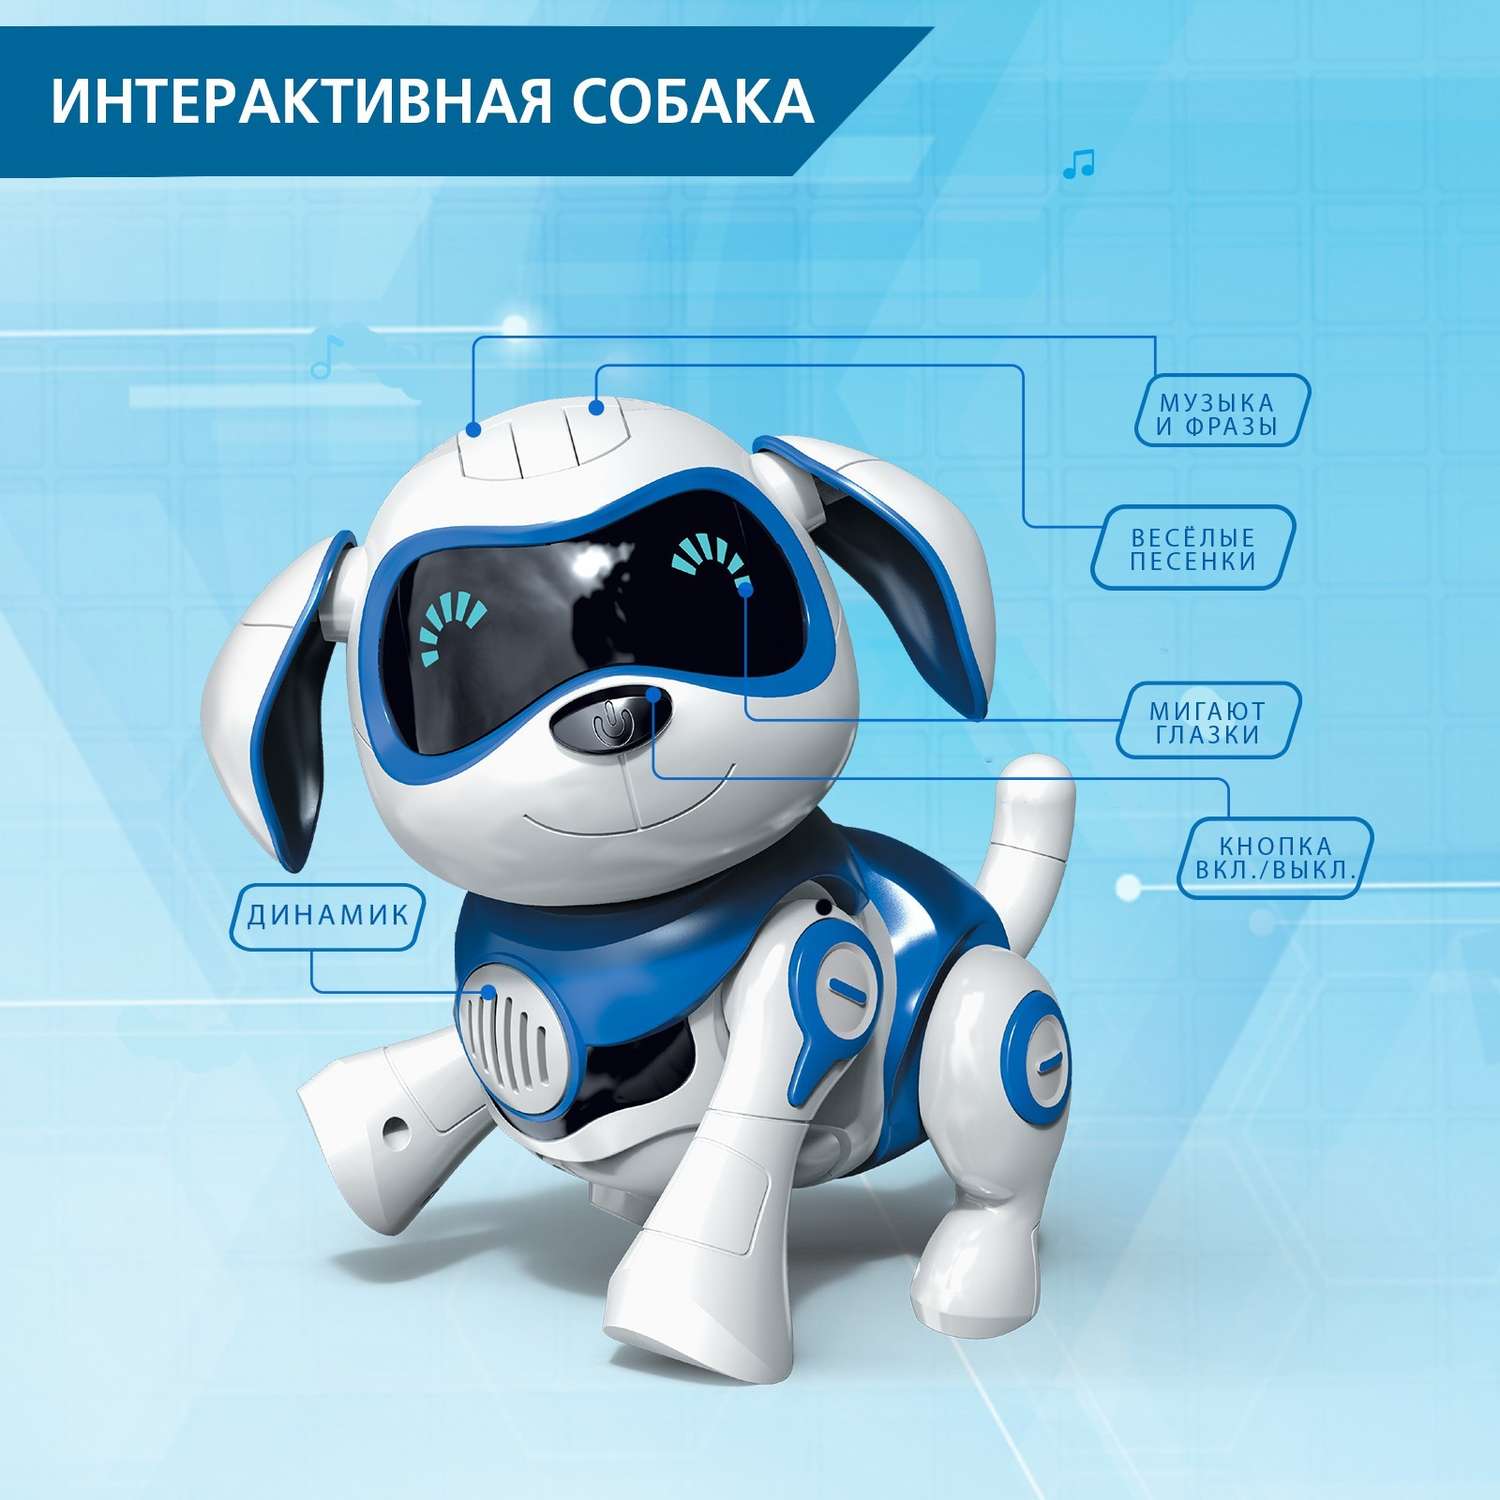 Интерактивная игрушка Zabiaka Робот собака «Чаппи» русское озвучивание цвет синий - фото 4